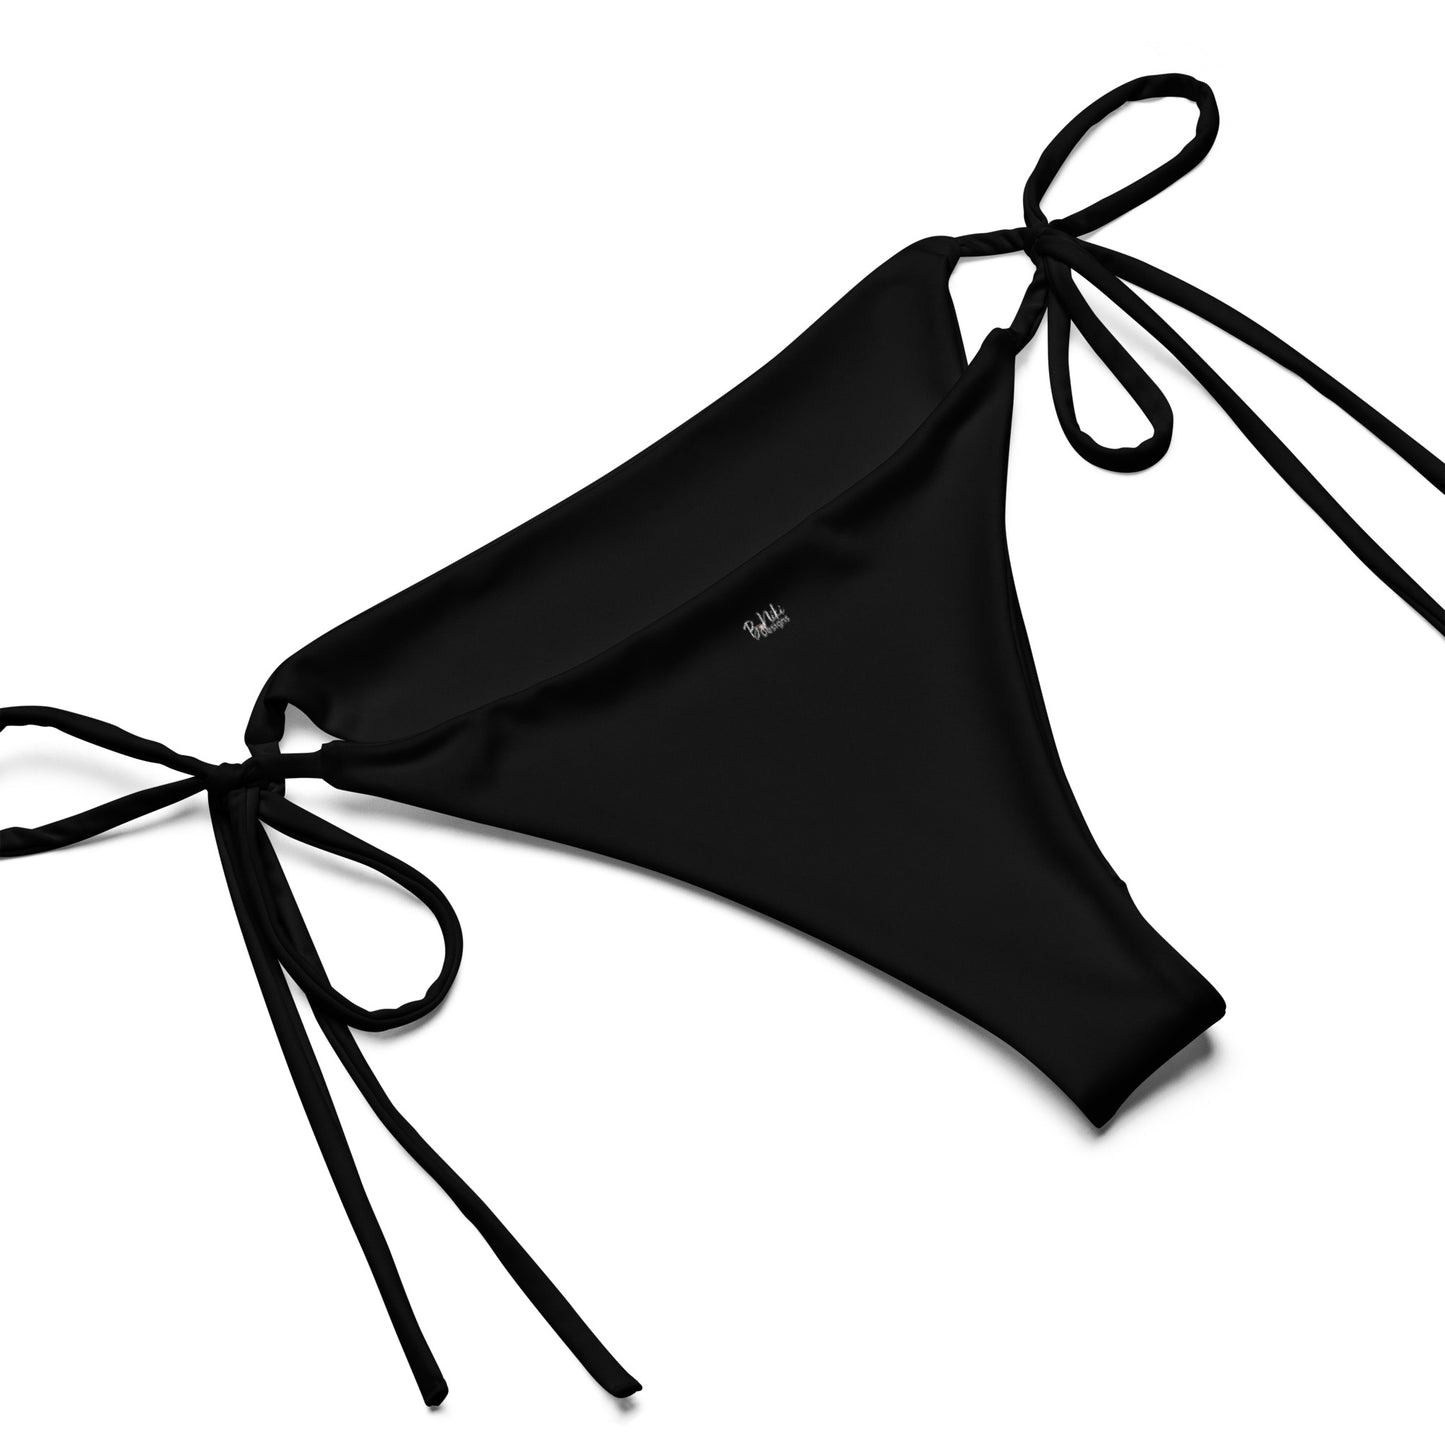 Basic Black String Bikini